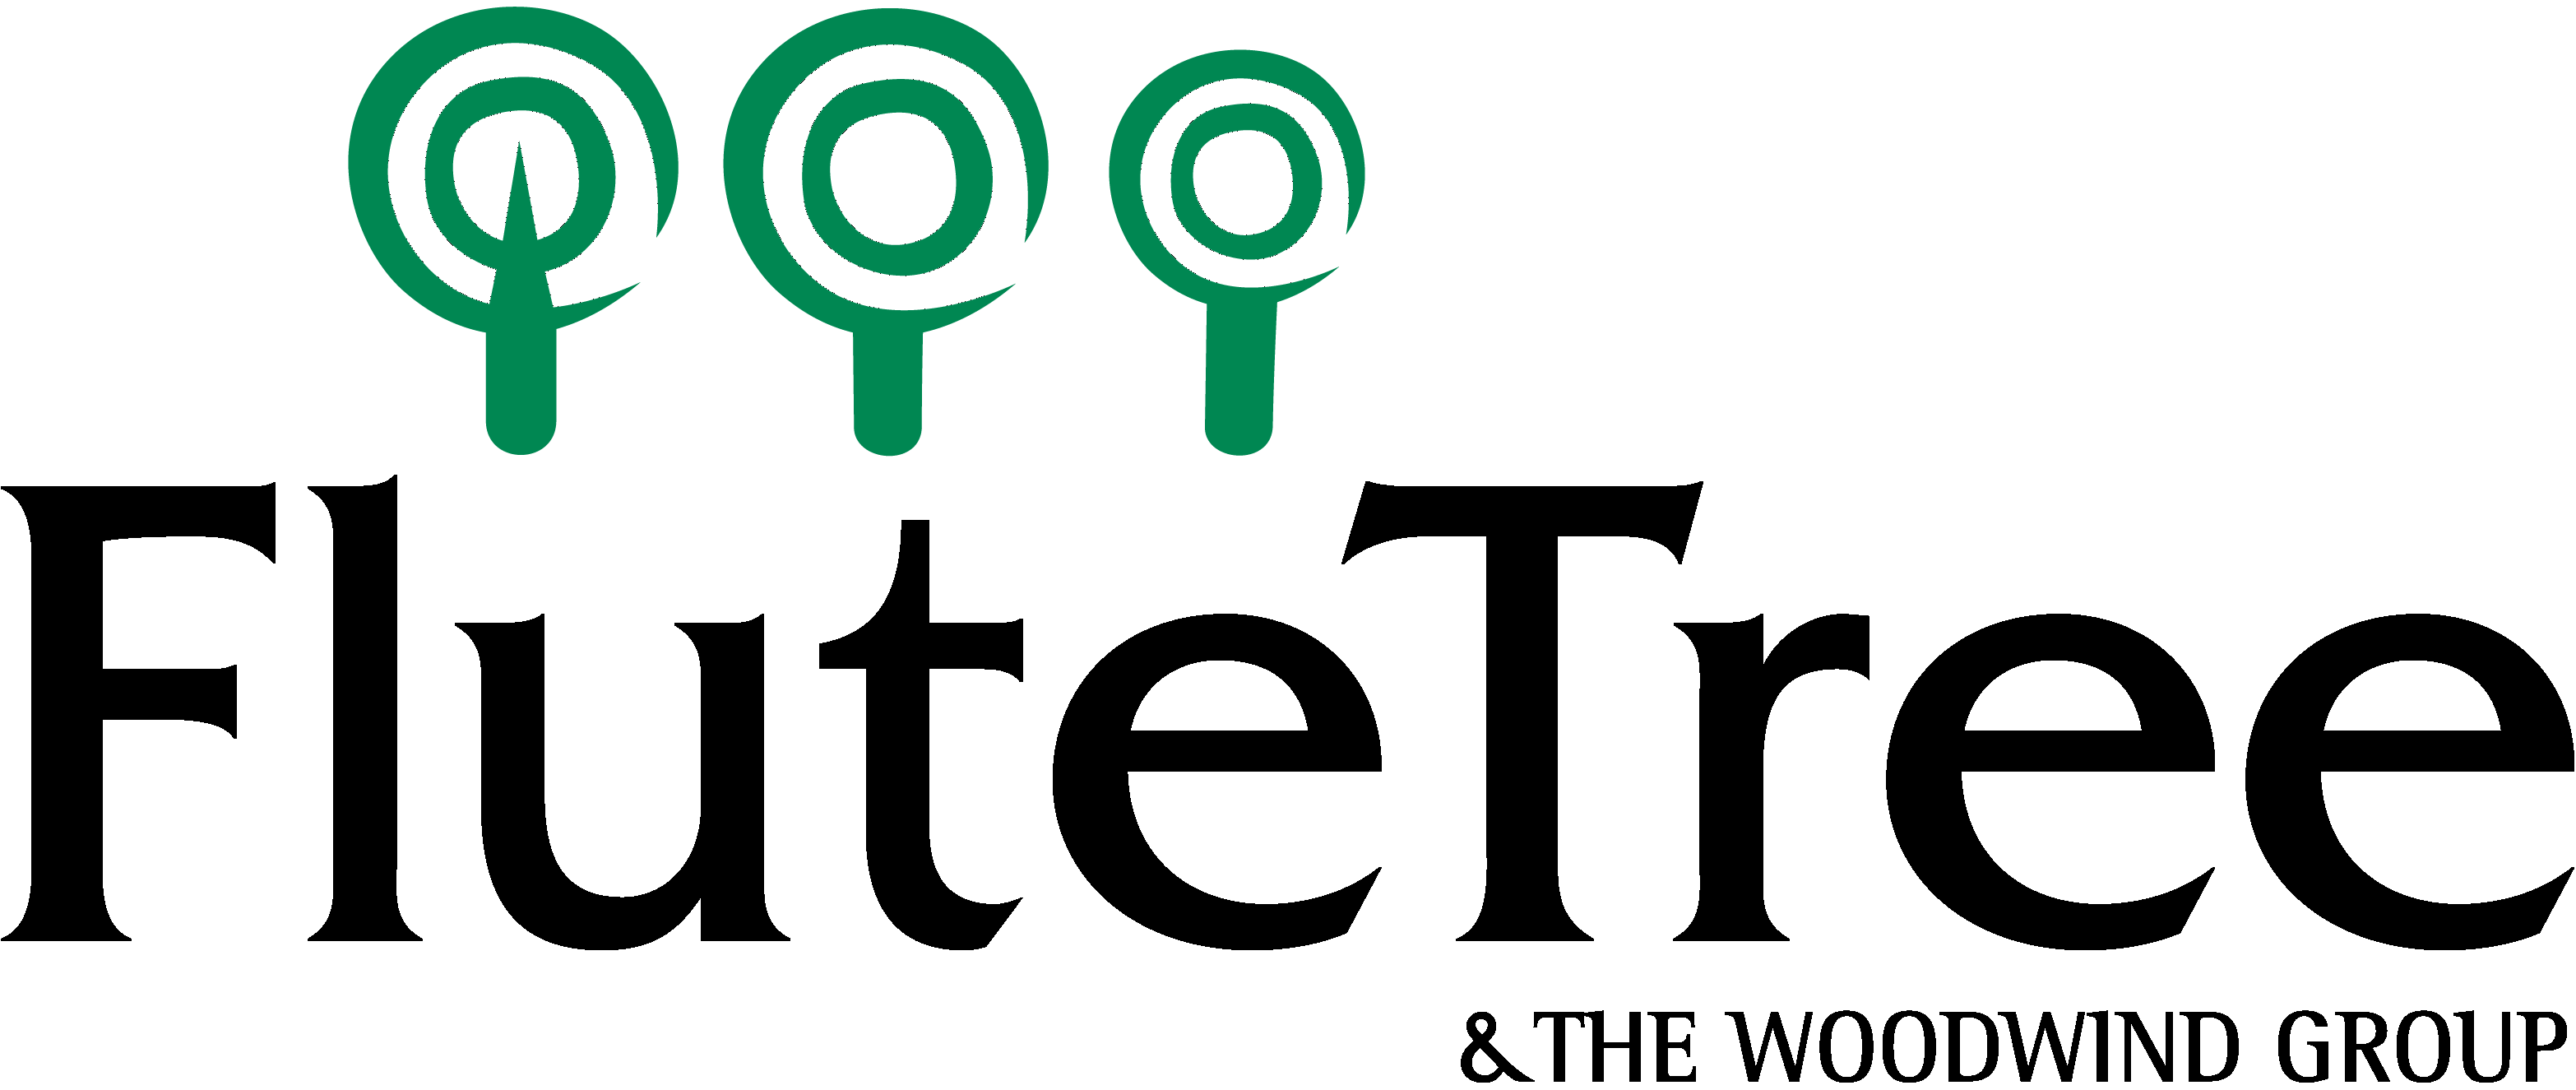 FluteTree logo